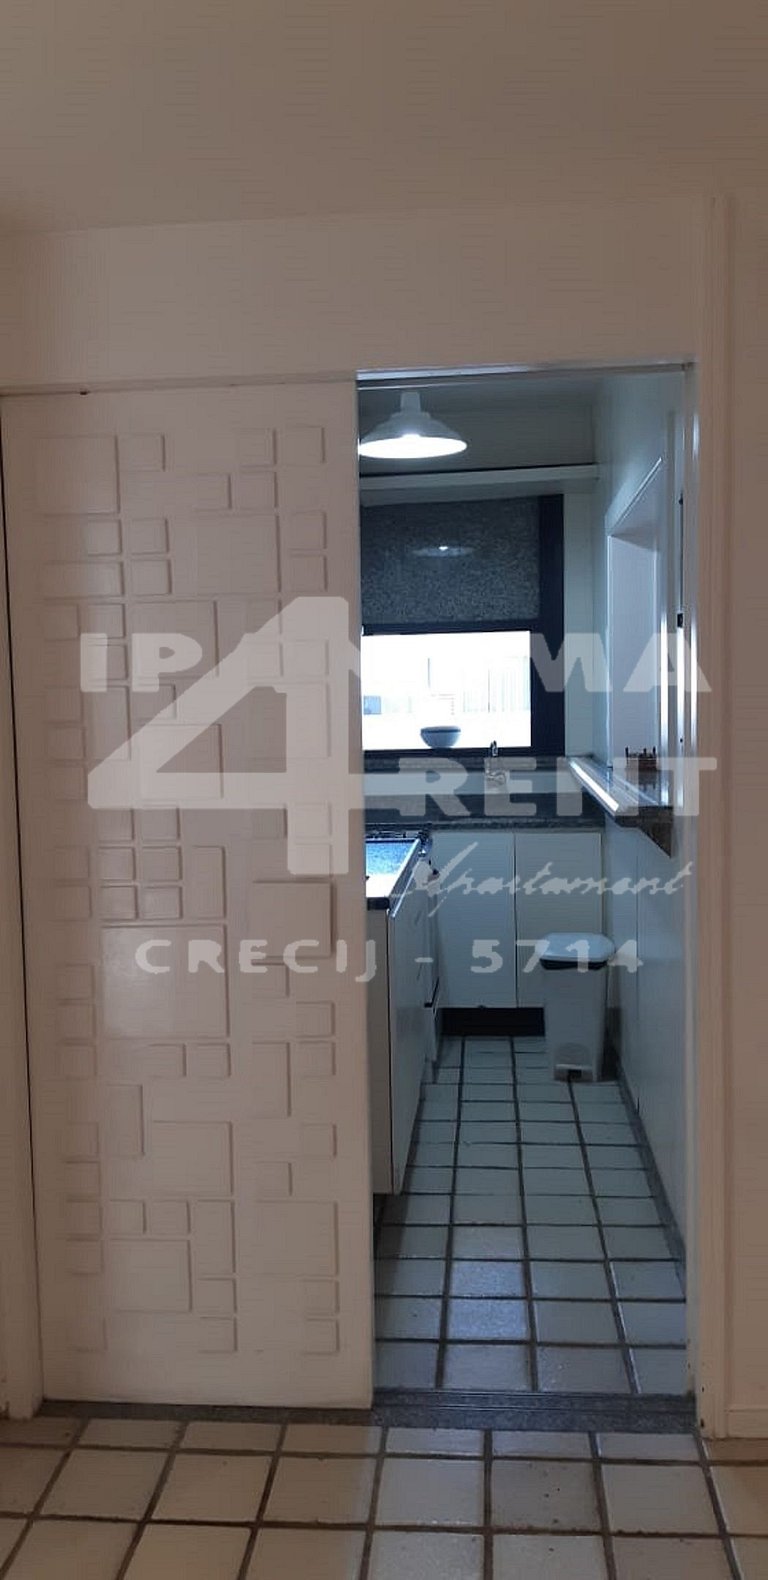 IPF2057 - Ipanema Tower Residence Service - Ipanema